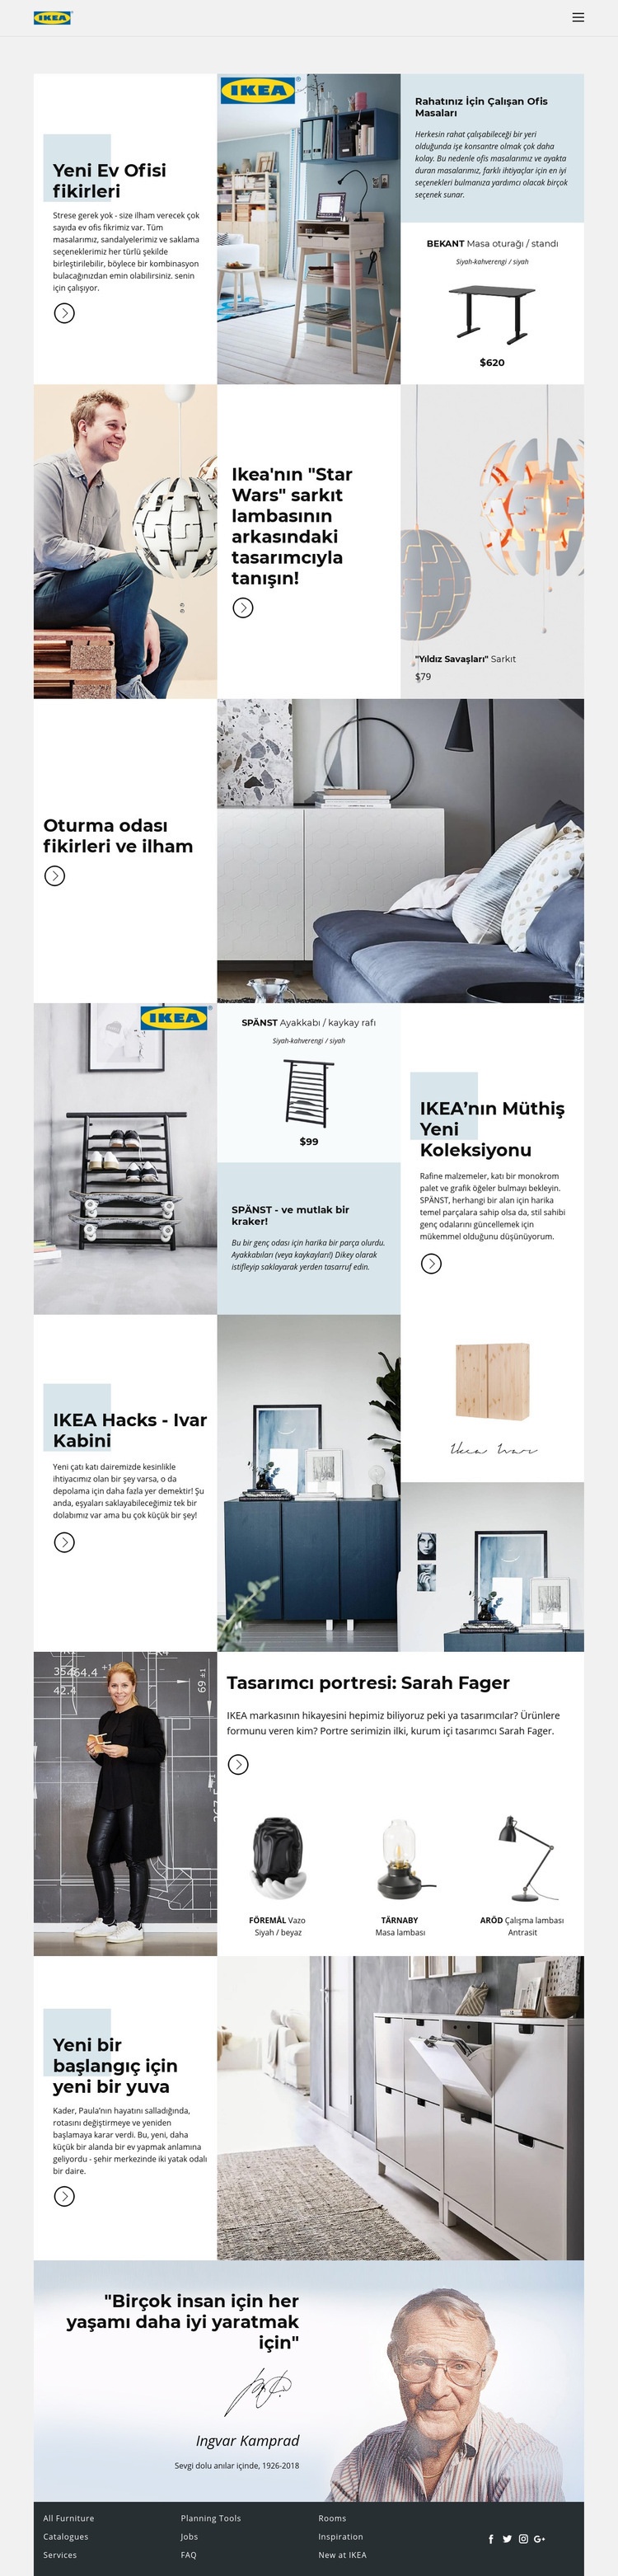 IKEA'dan İlham HTML5 Şablonu